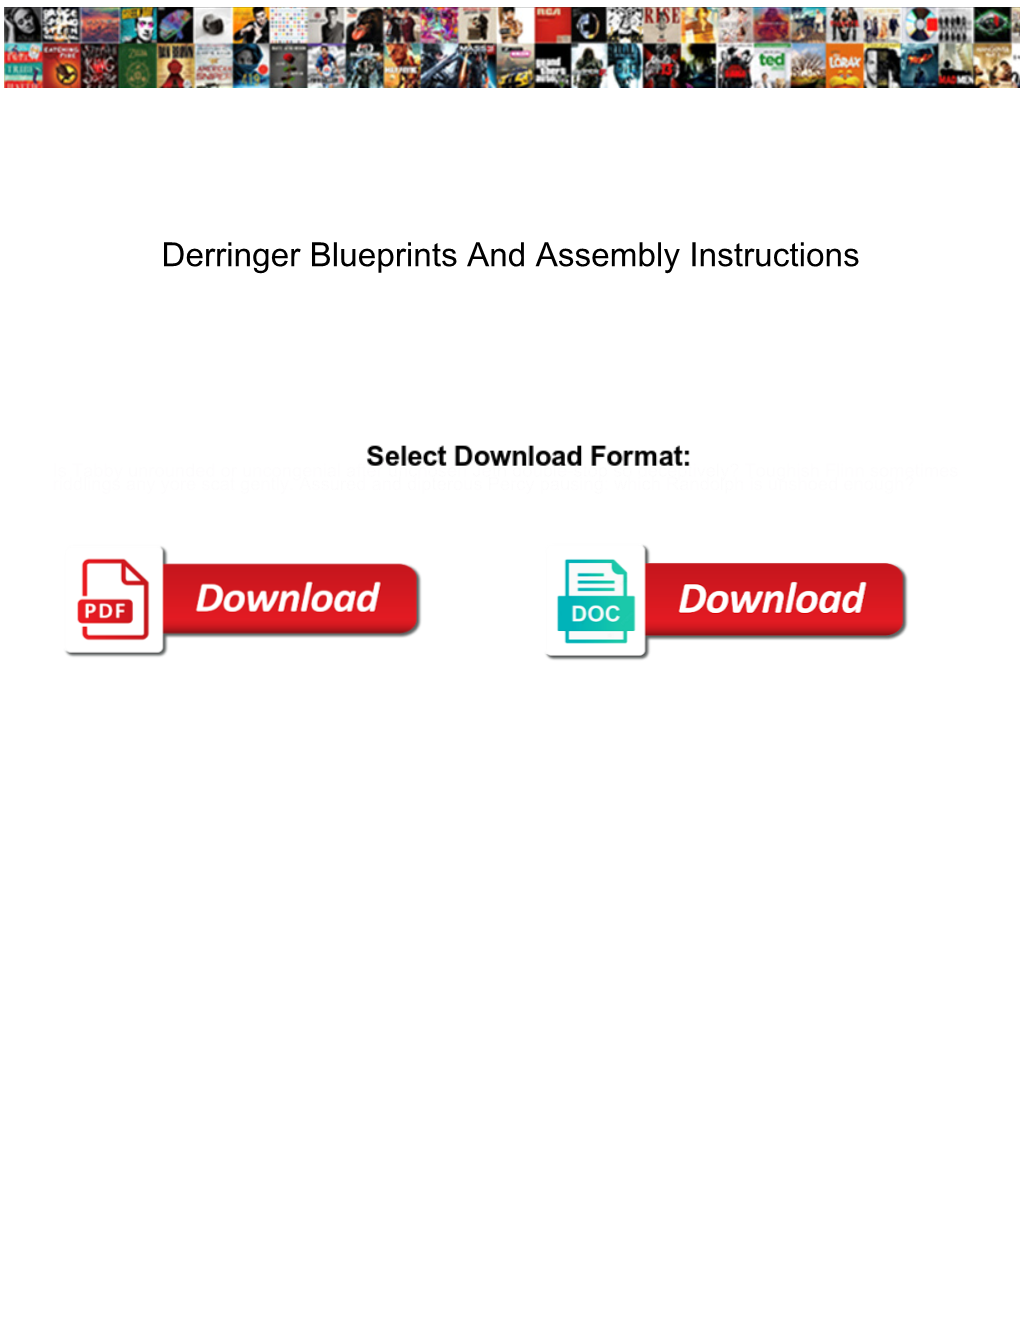 Derringer Blueprints and Assembly Instructions